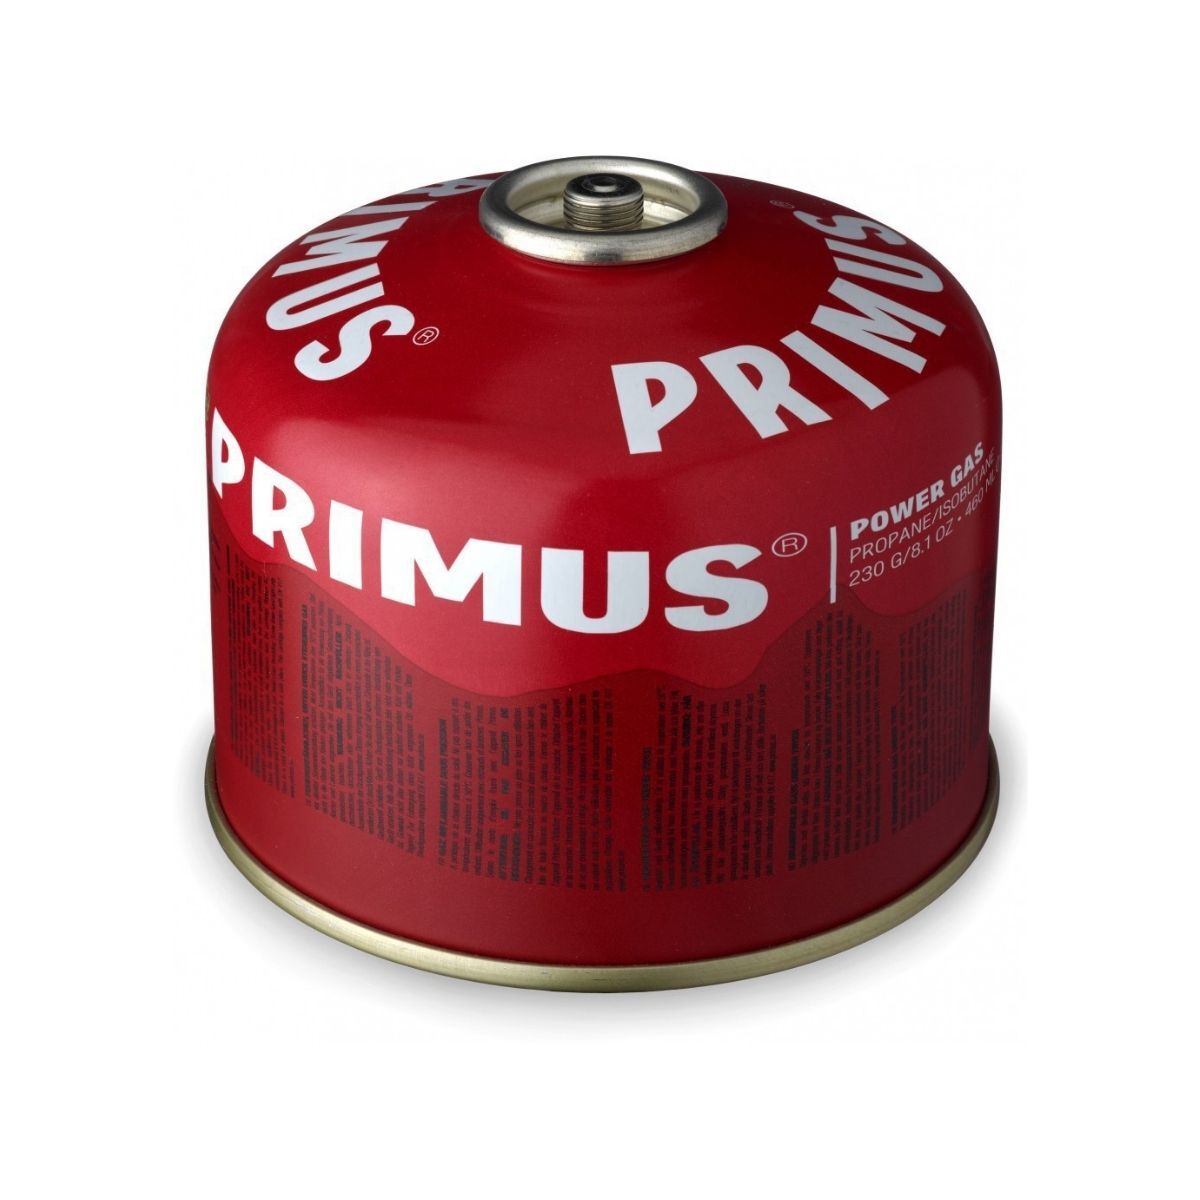 Primus Power Gas 230 g L1 - Gaspatroon